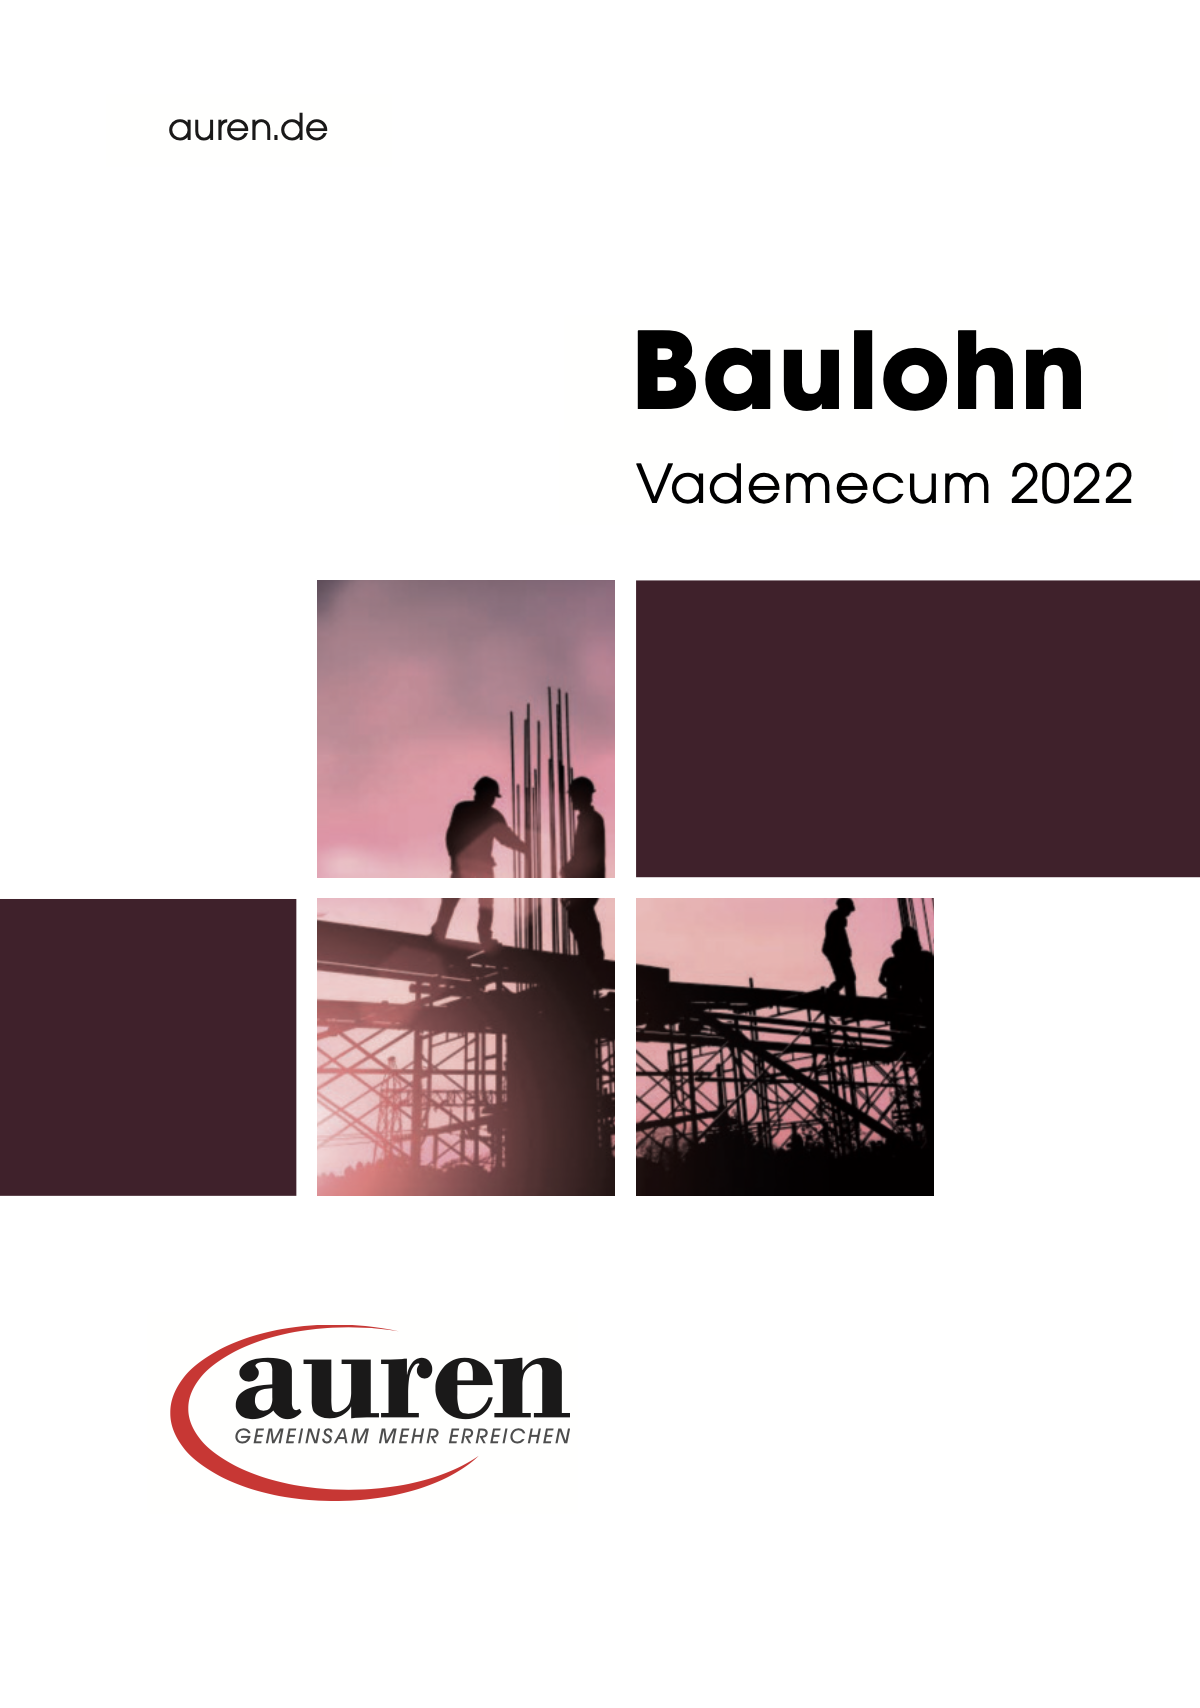 Vademecum 2022 Baulohn